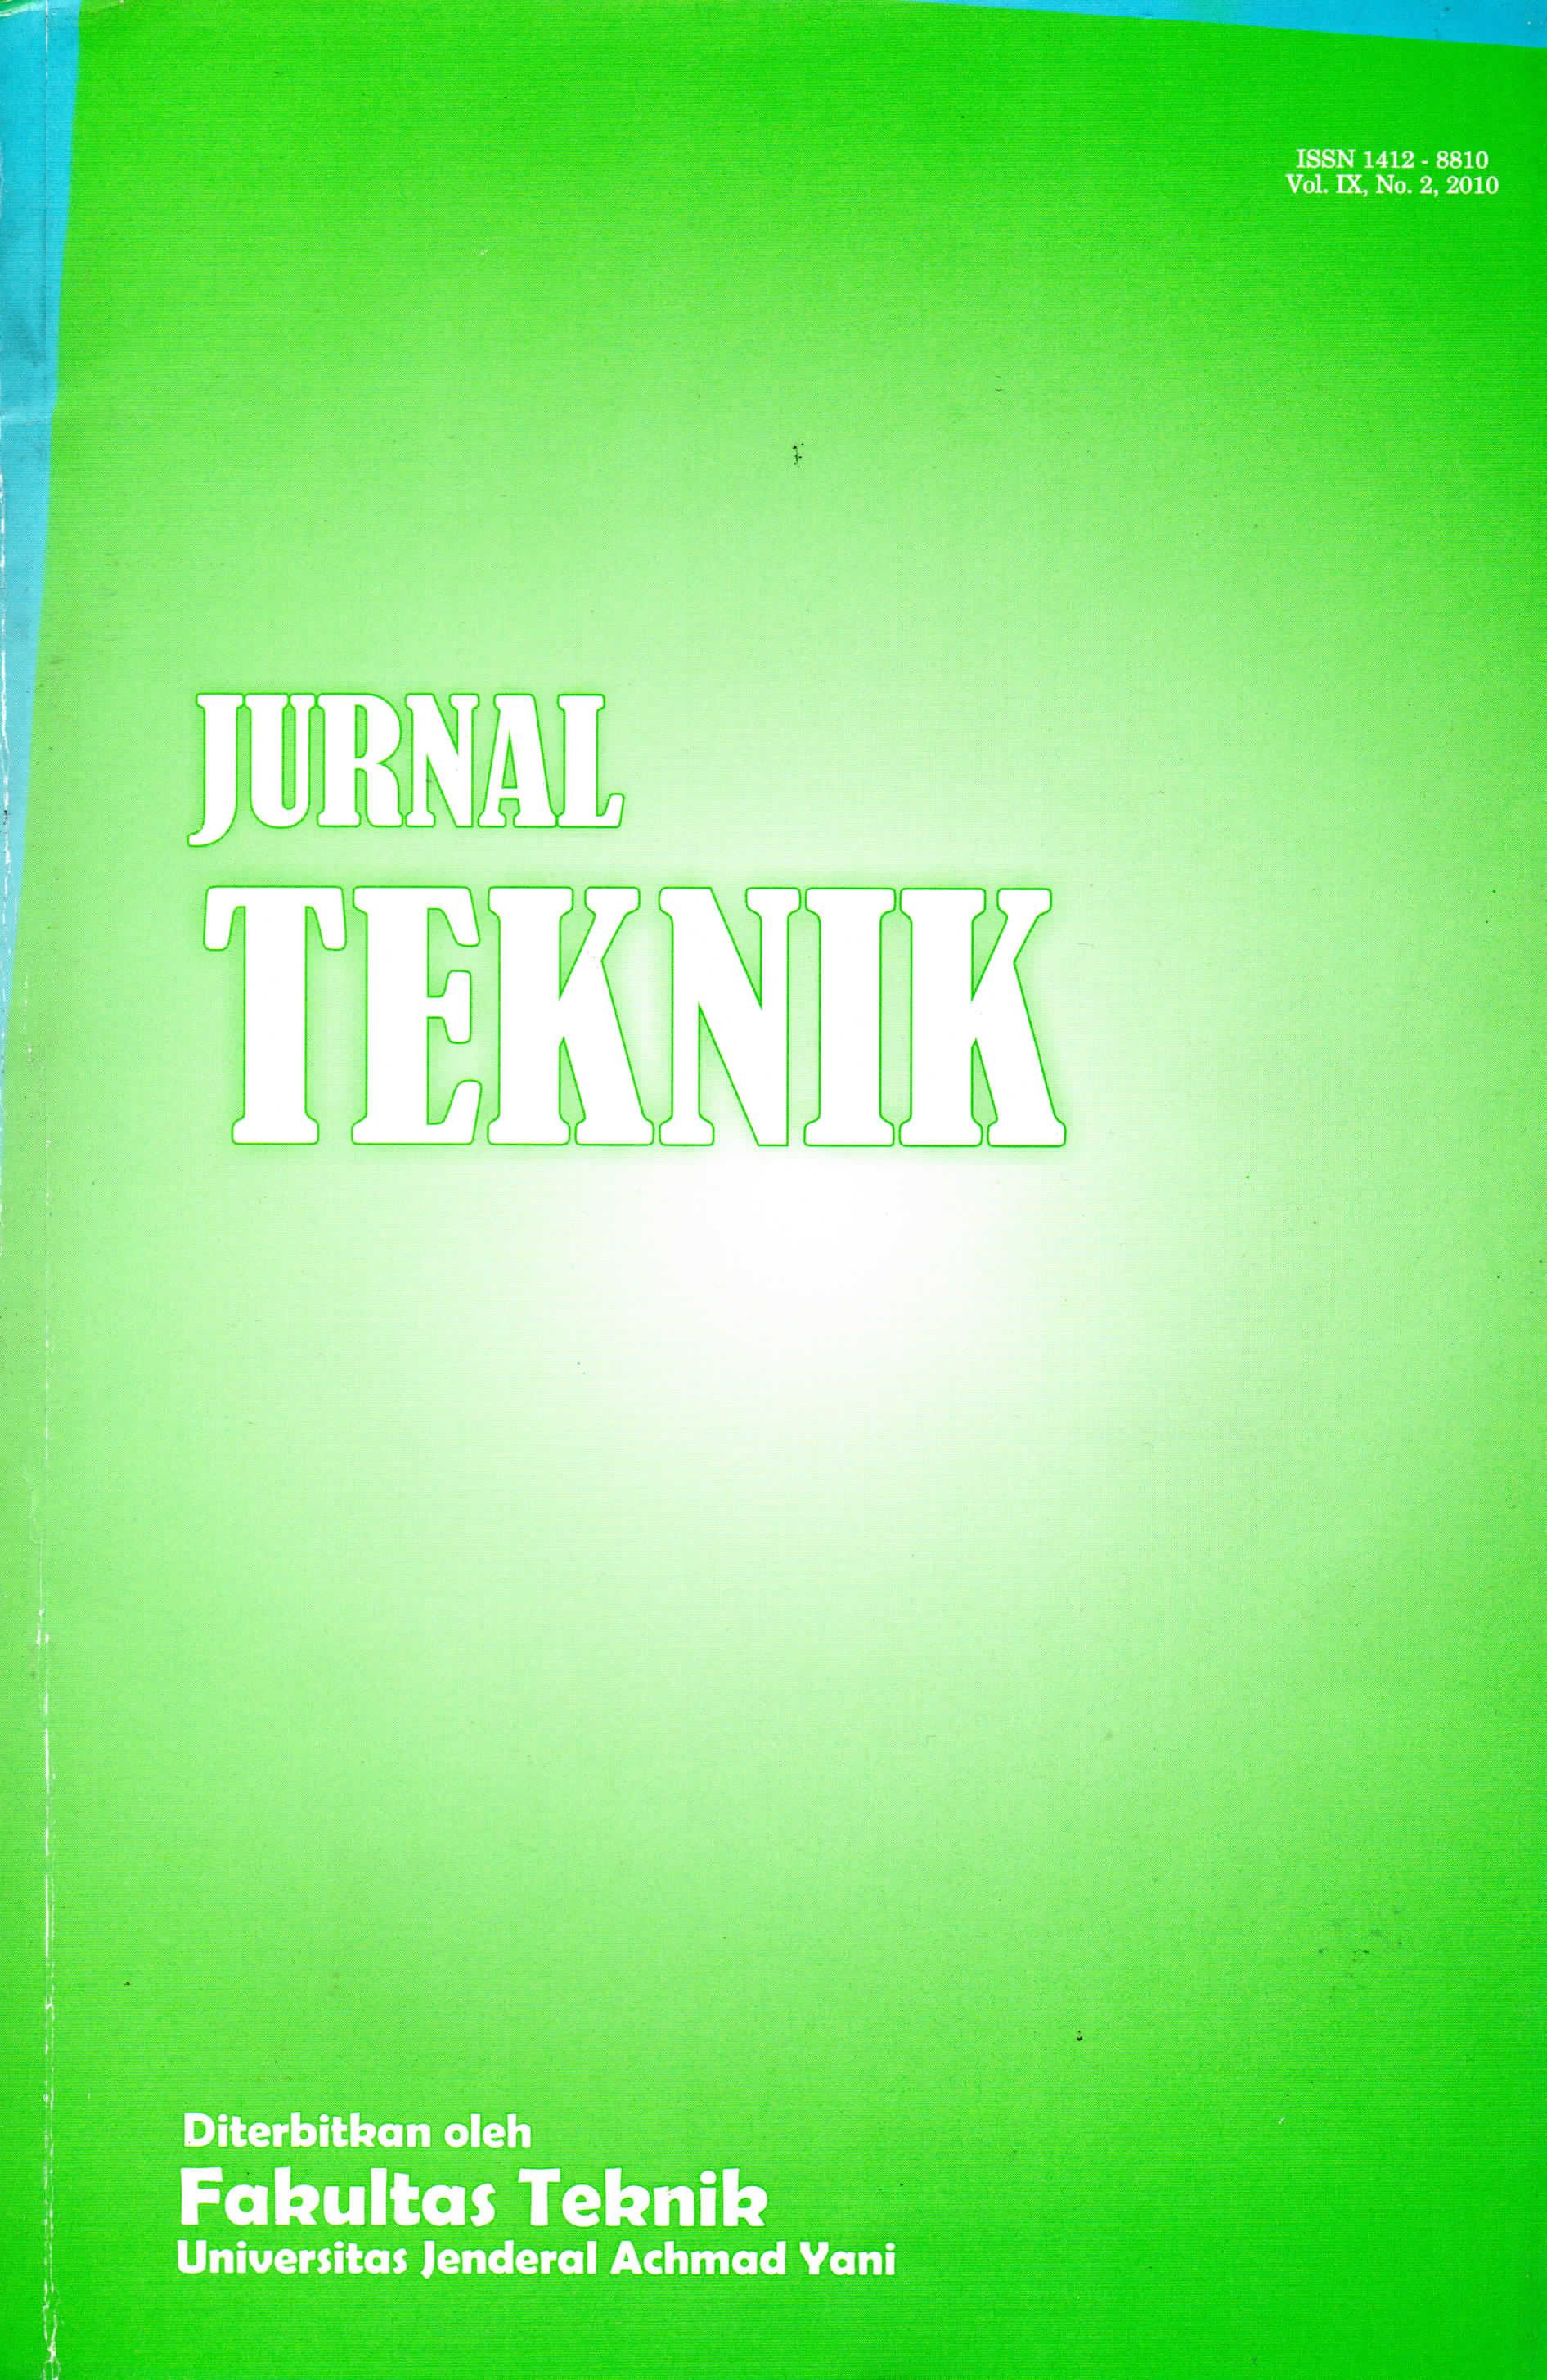 					View Vol. 9 No. 2 (2010): Jurnal Teknik - Media Pengembangan Ilmu dan Aplikasi Teknik
				